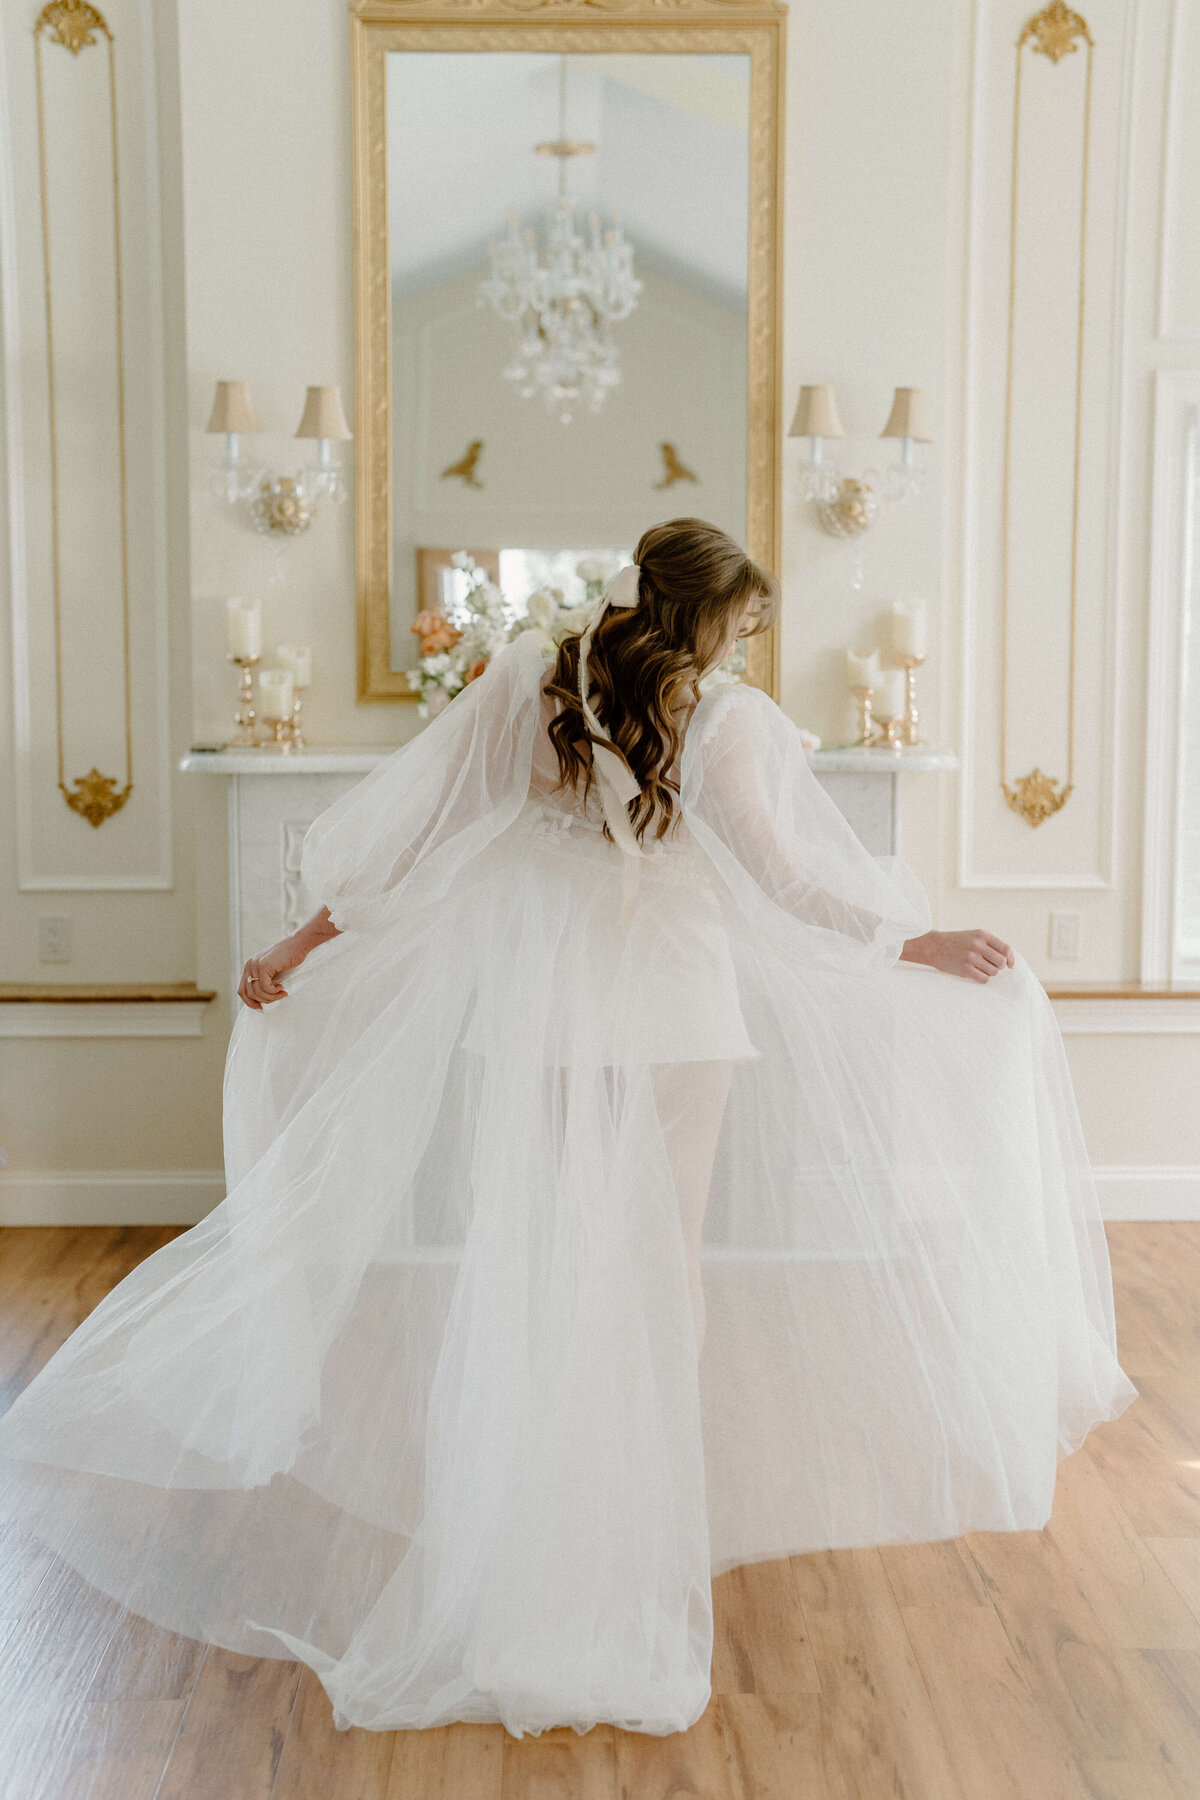 Bride in white flowing dress